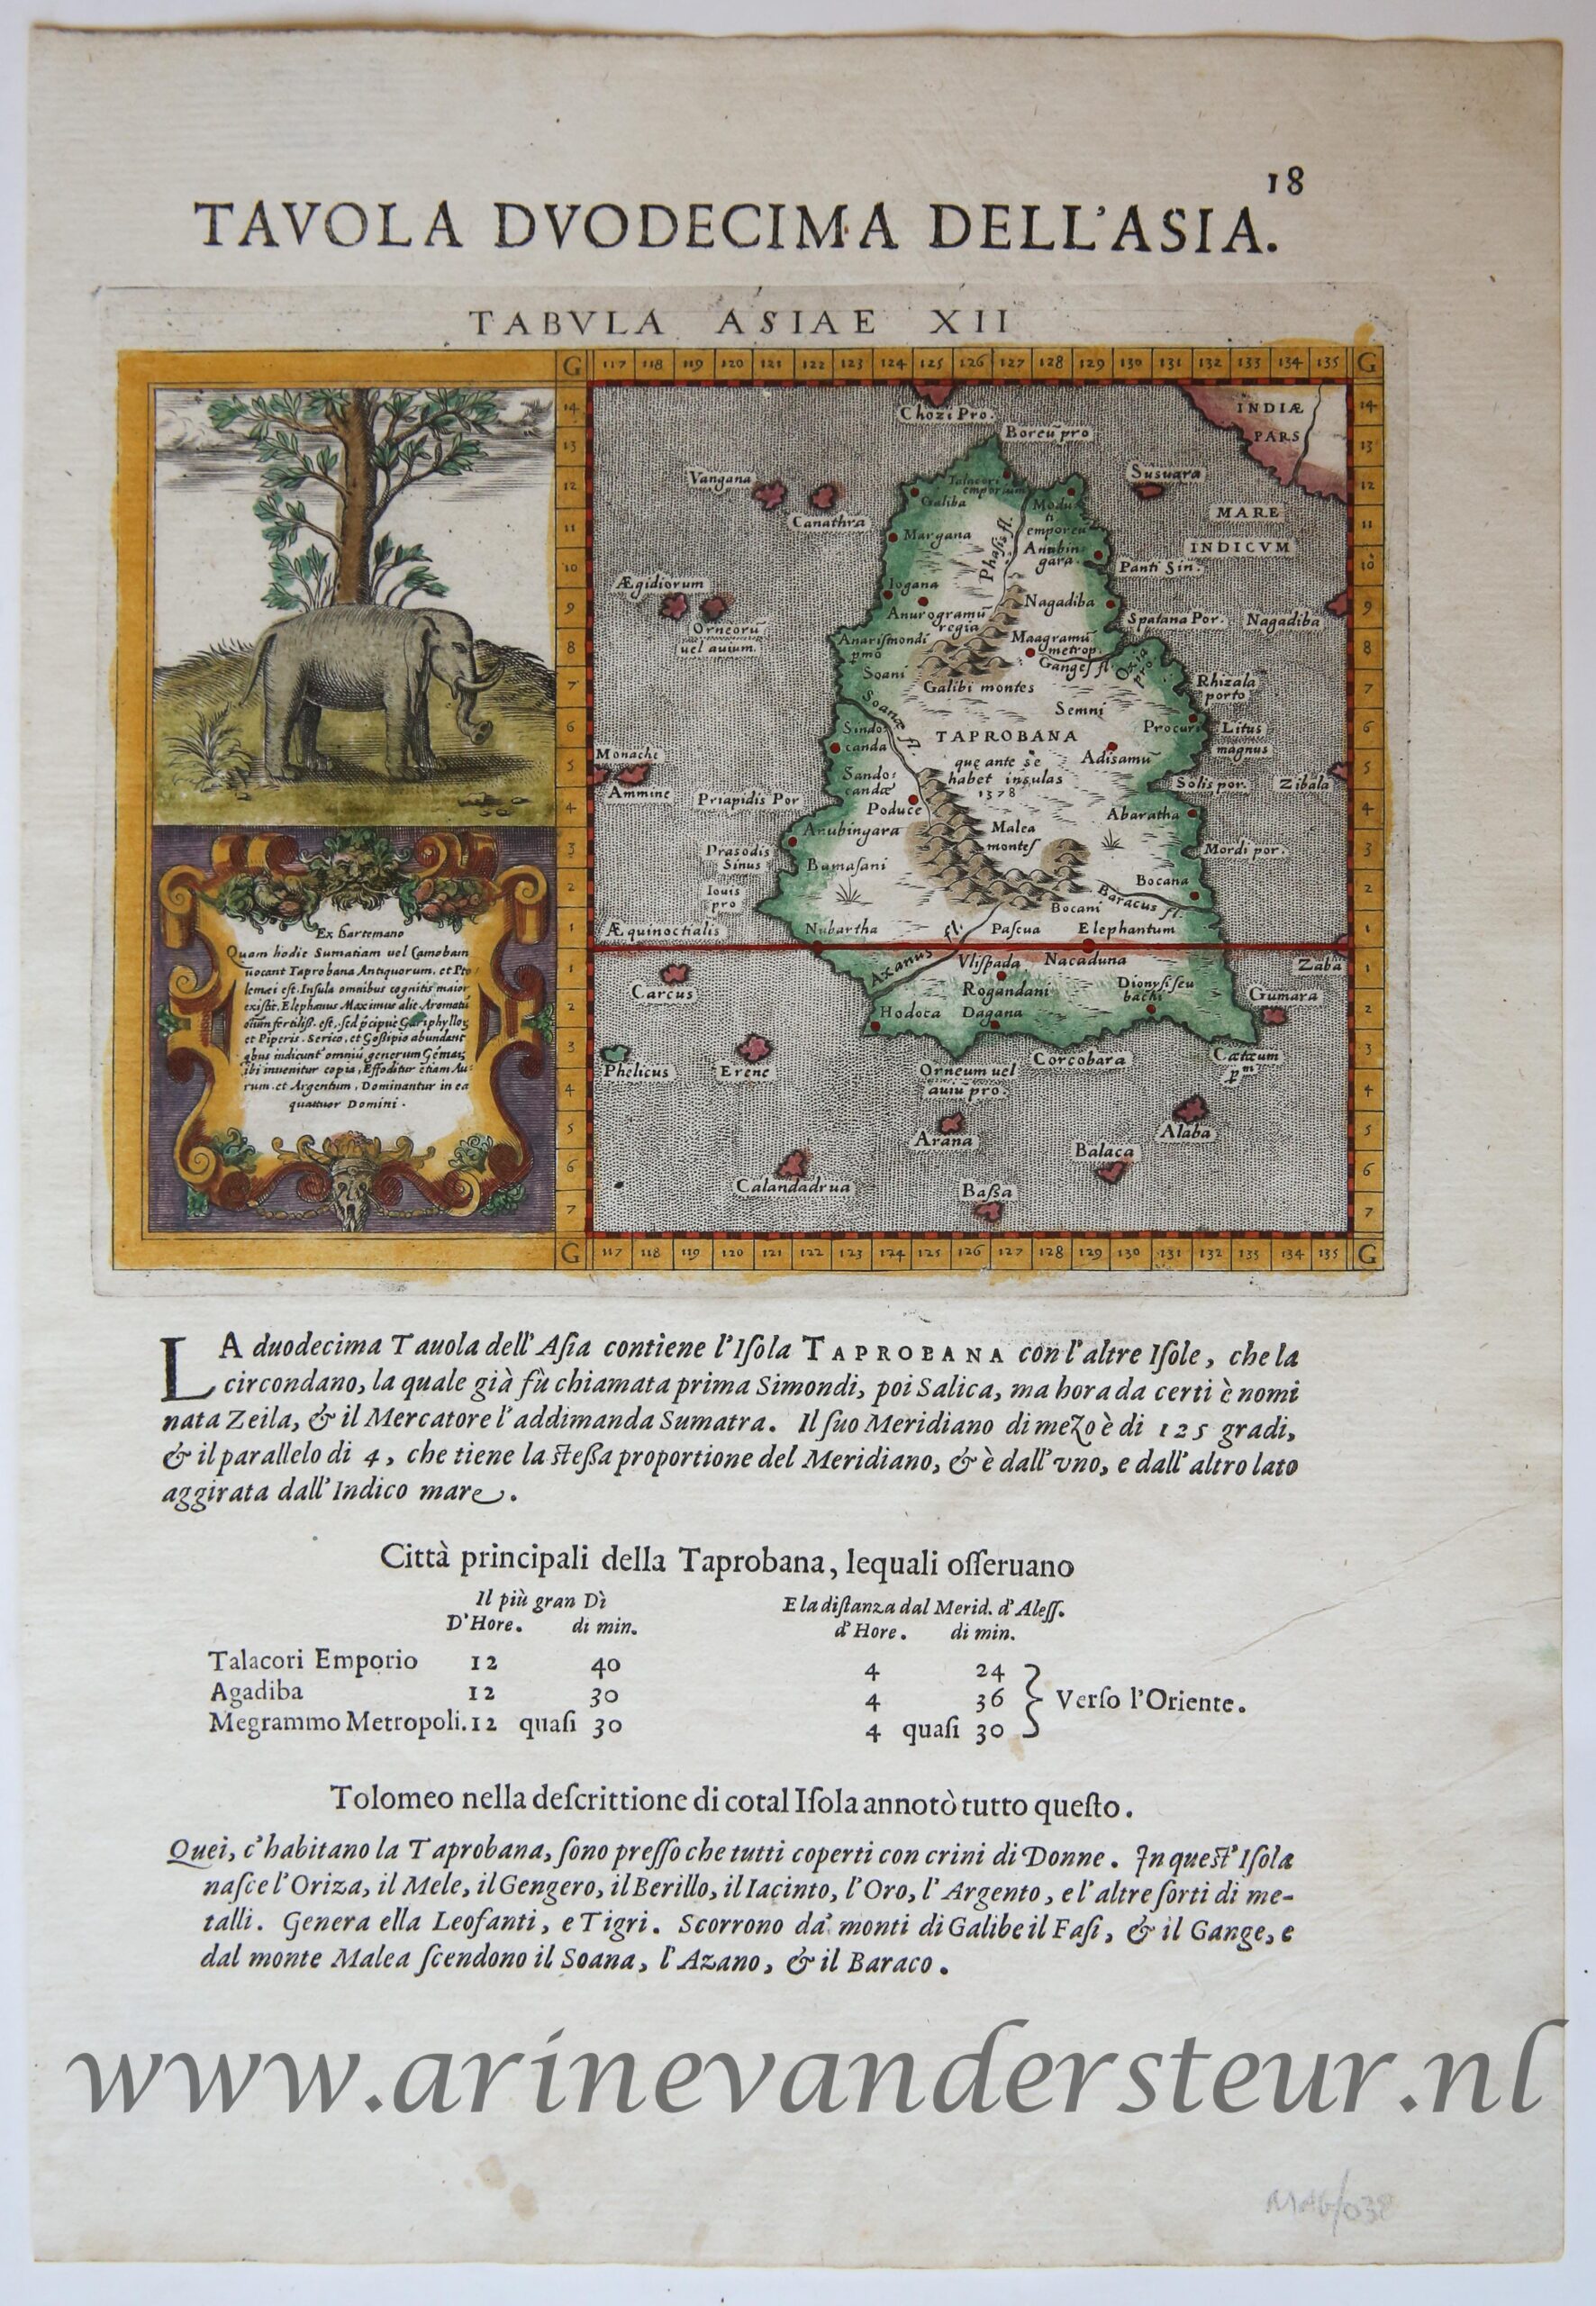 [Antique print, handcolored etching] Sri Lanka / TAVOLA DVODECIMA DELL'ASIA. Published 1598, 1 p.